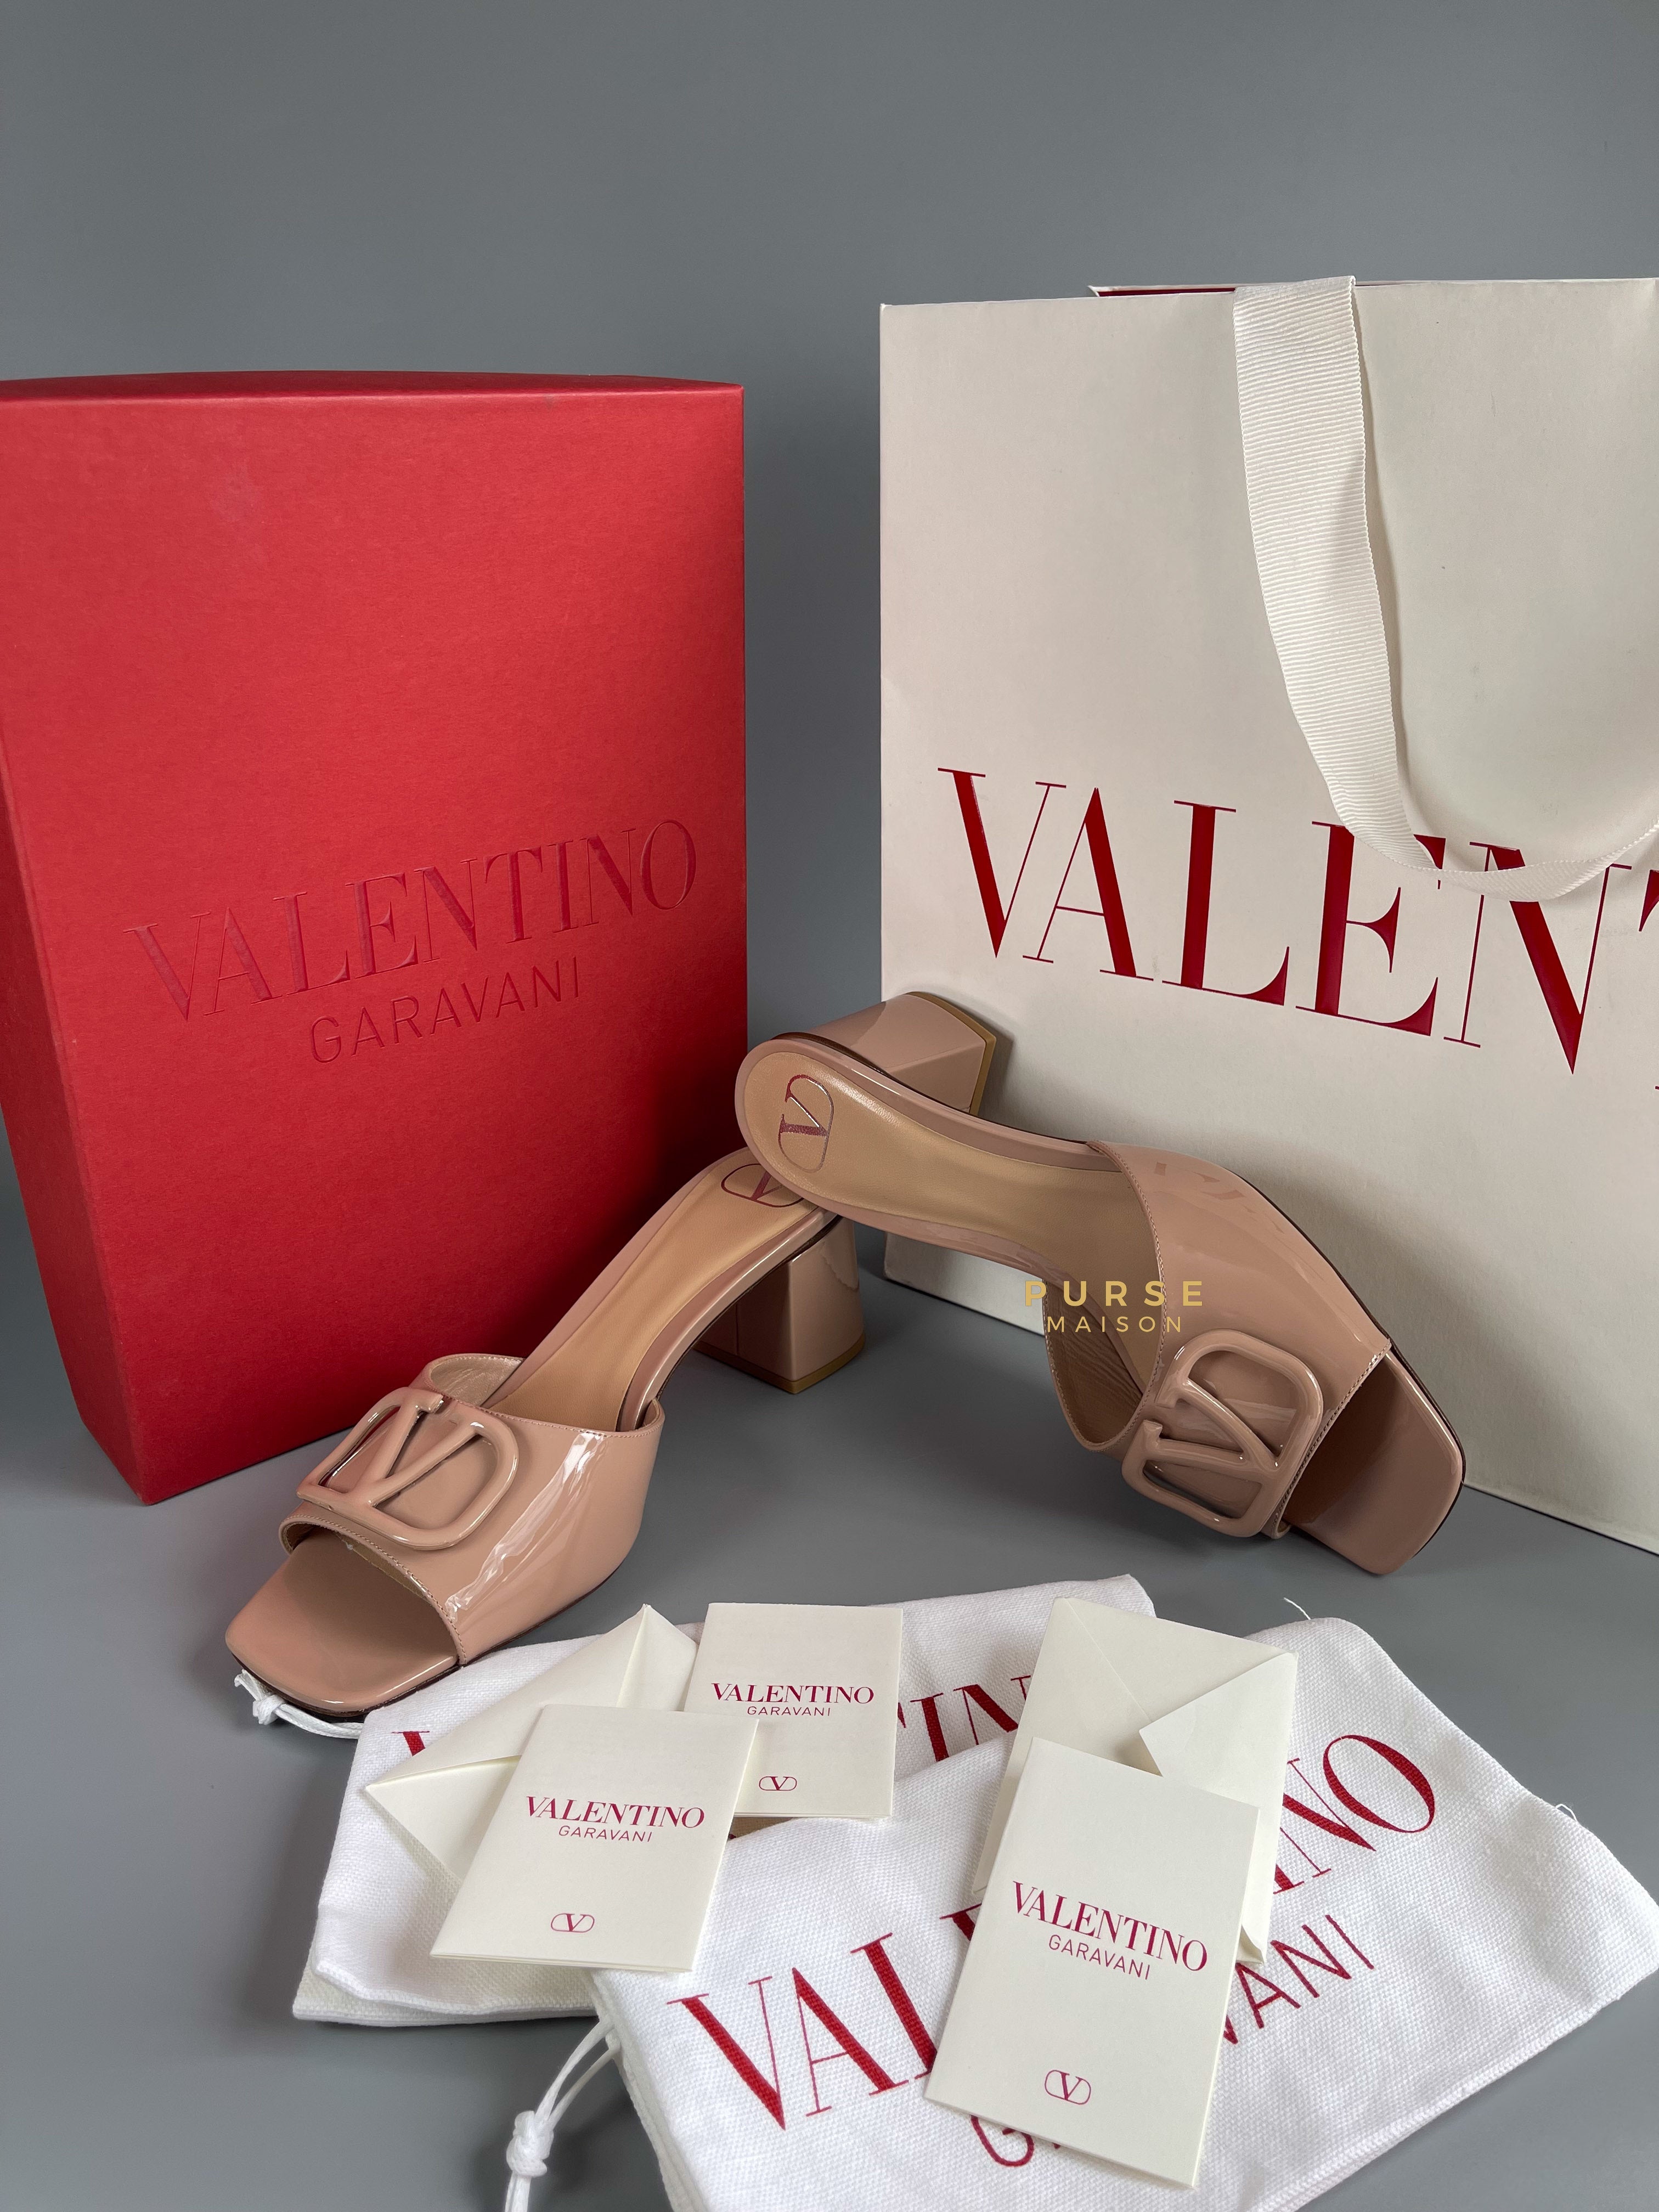 Valentino Garavani Beige Leather VLogo Heeled Sandals Size 38.5 EU | Purse Maison Luxury Bags Shop